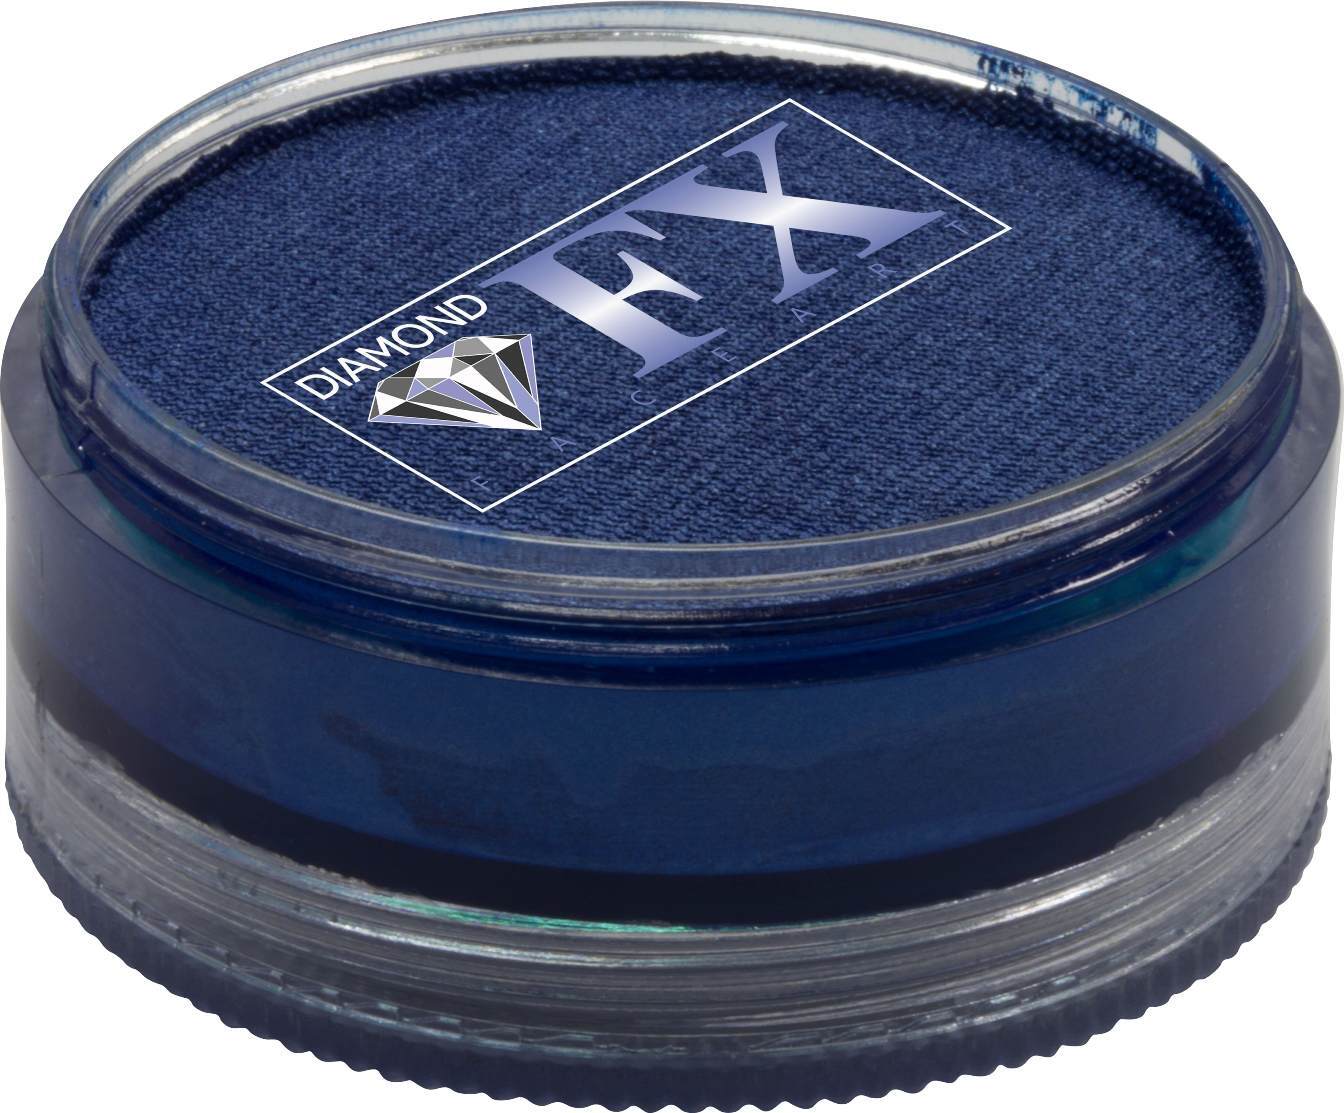 Diamond FX Blue Metallic 90g - Small Image